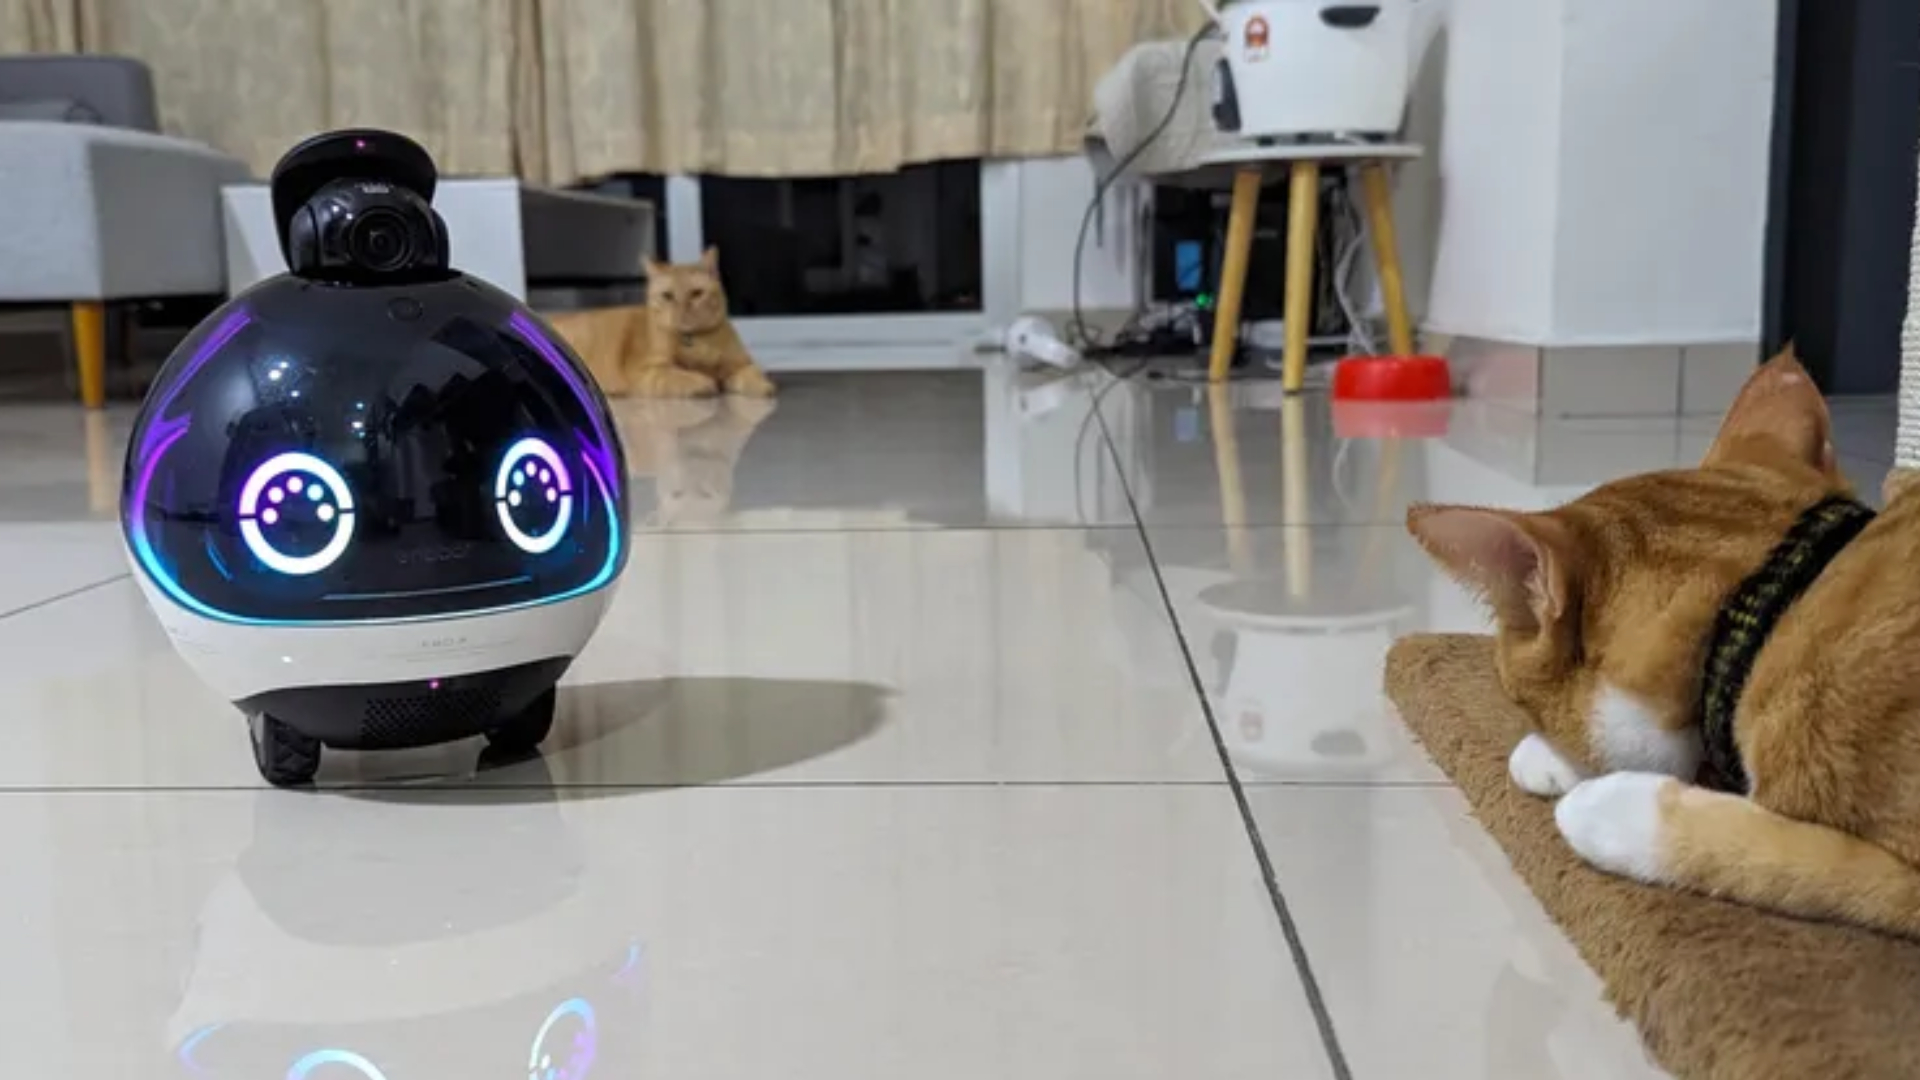 Enabot EBO X Family Robot Companion with 4K Stabilized Camera, Alexa Support